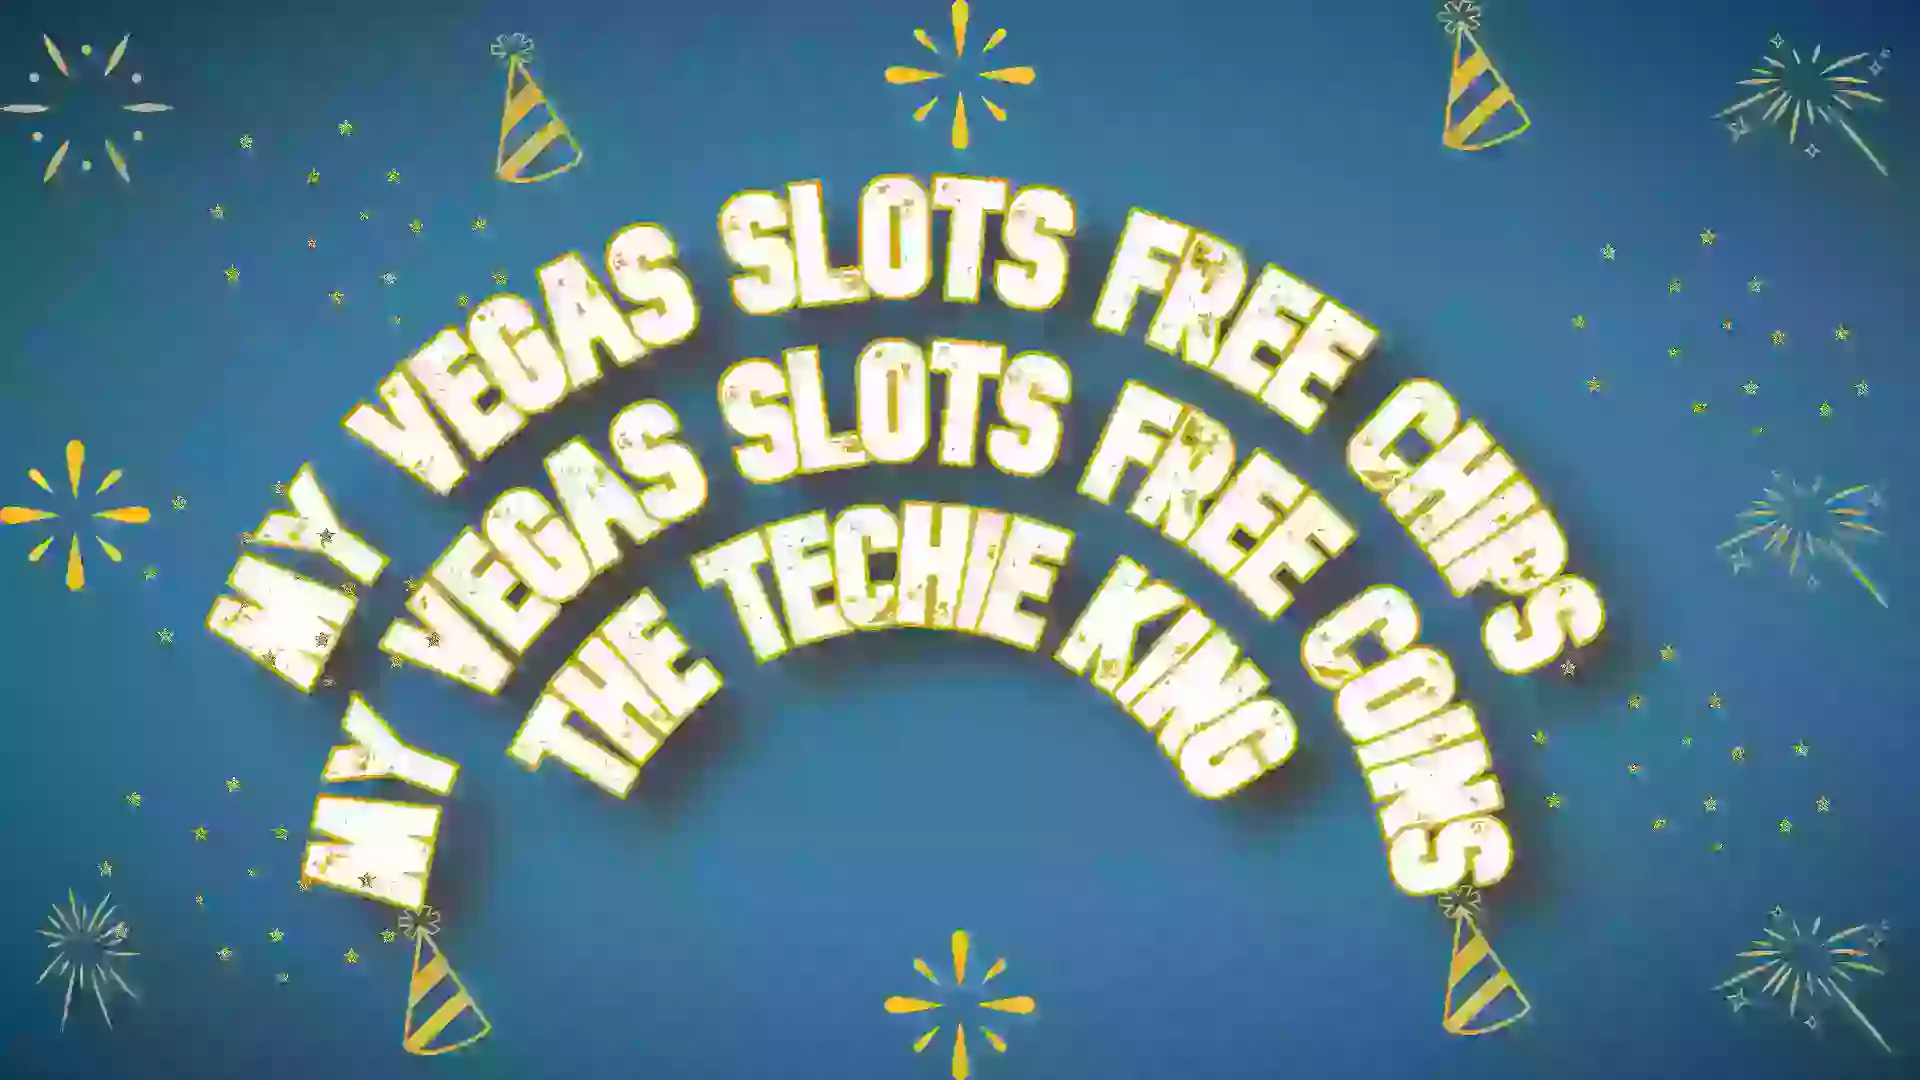 Myvegas free chips | Myvegas slots free chips 2022